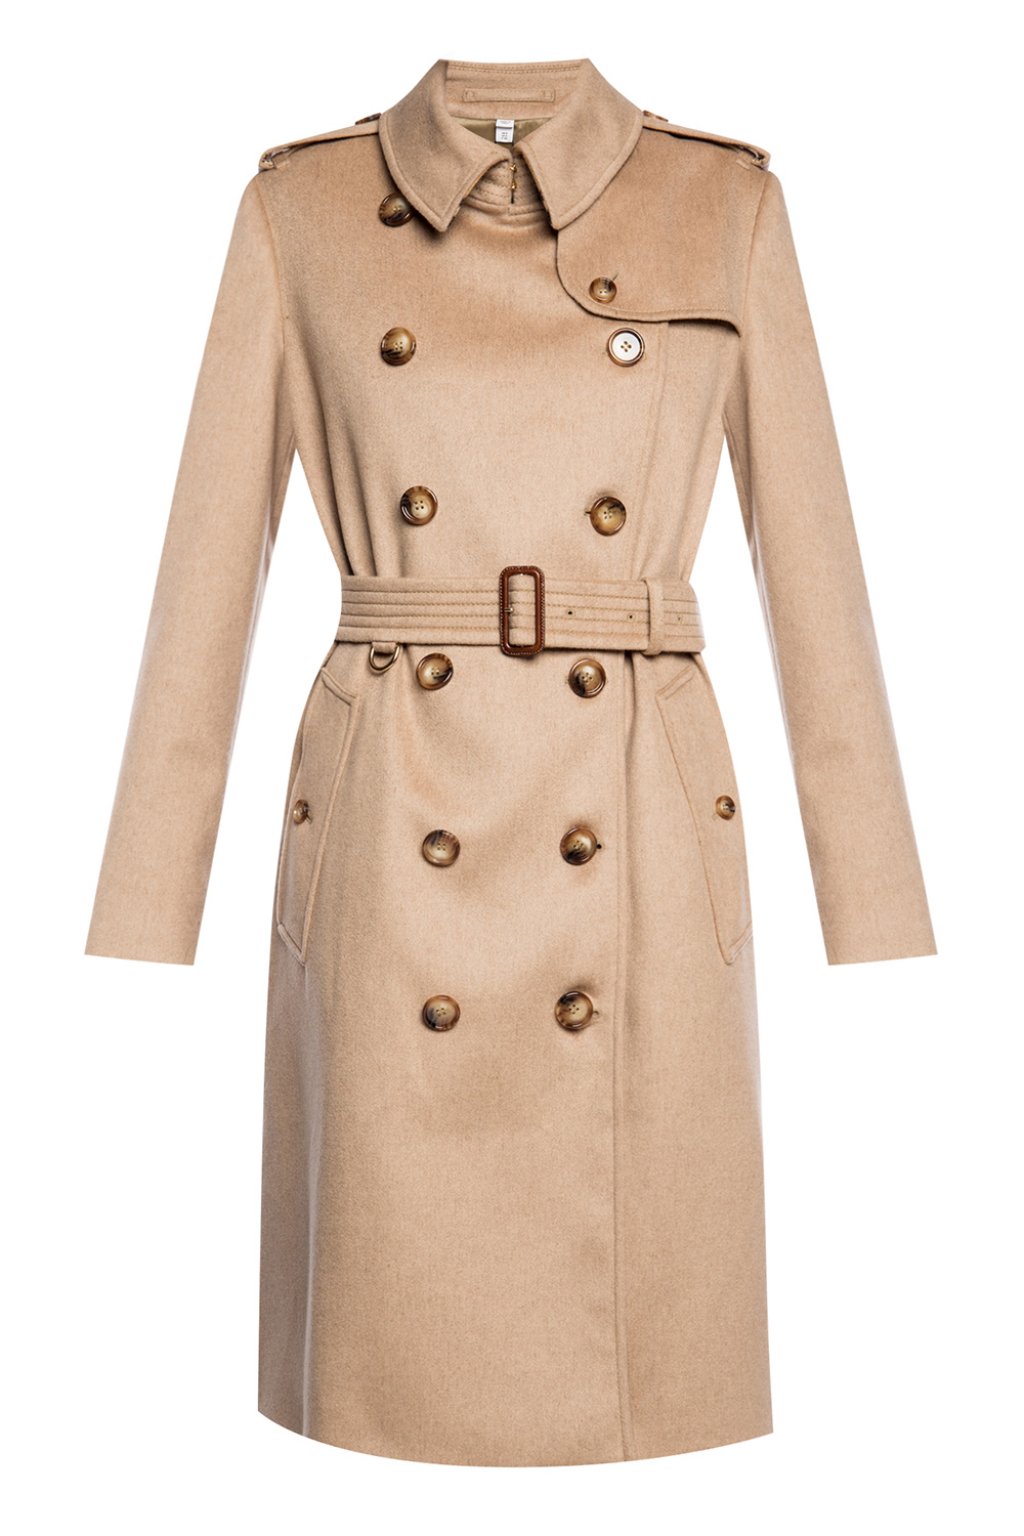 Beige 'Kensington' cashmere trench coat Burberry - Vitkac France